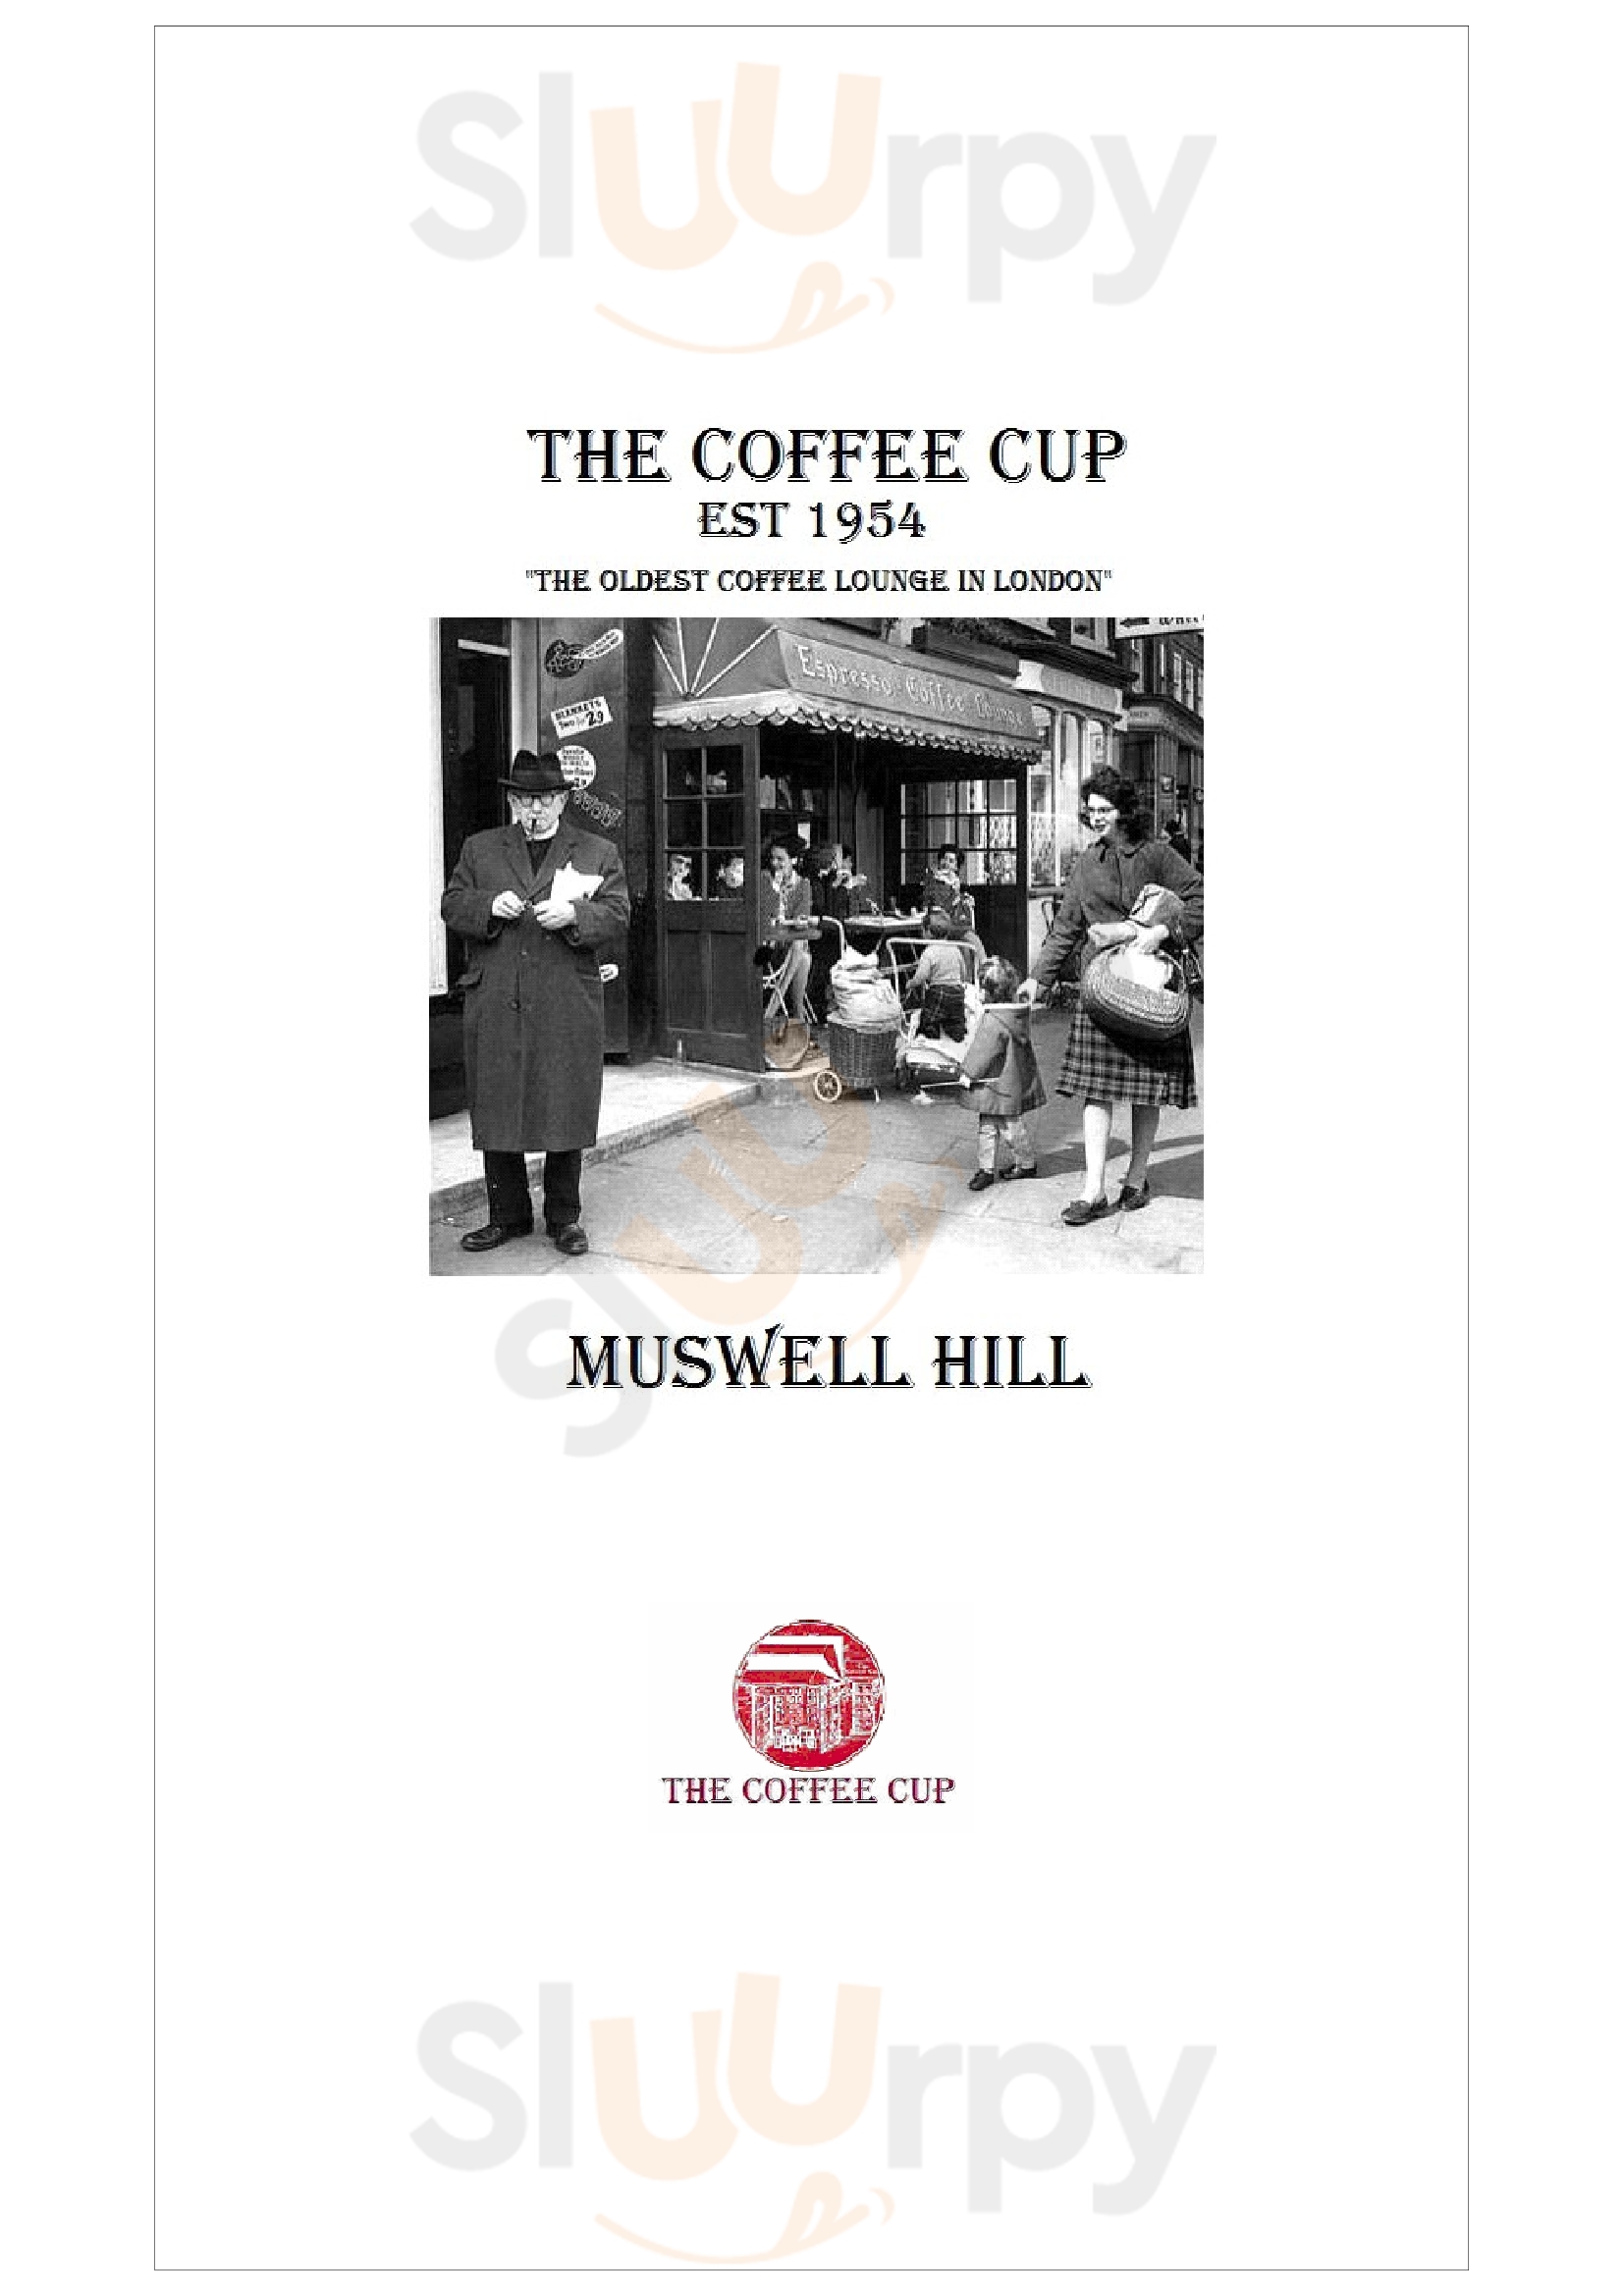 The Coffee Cup London Menu - 1